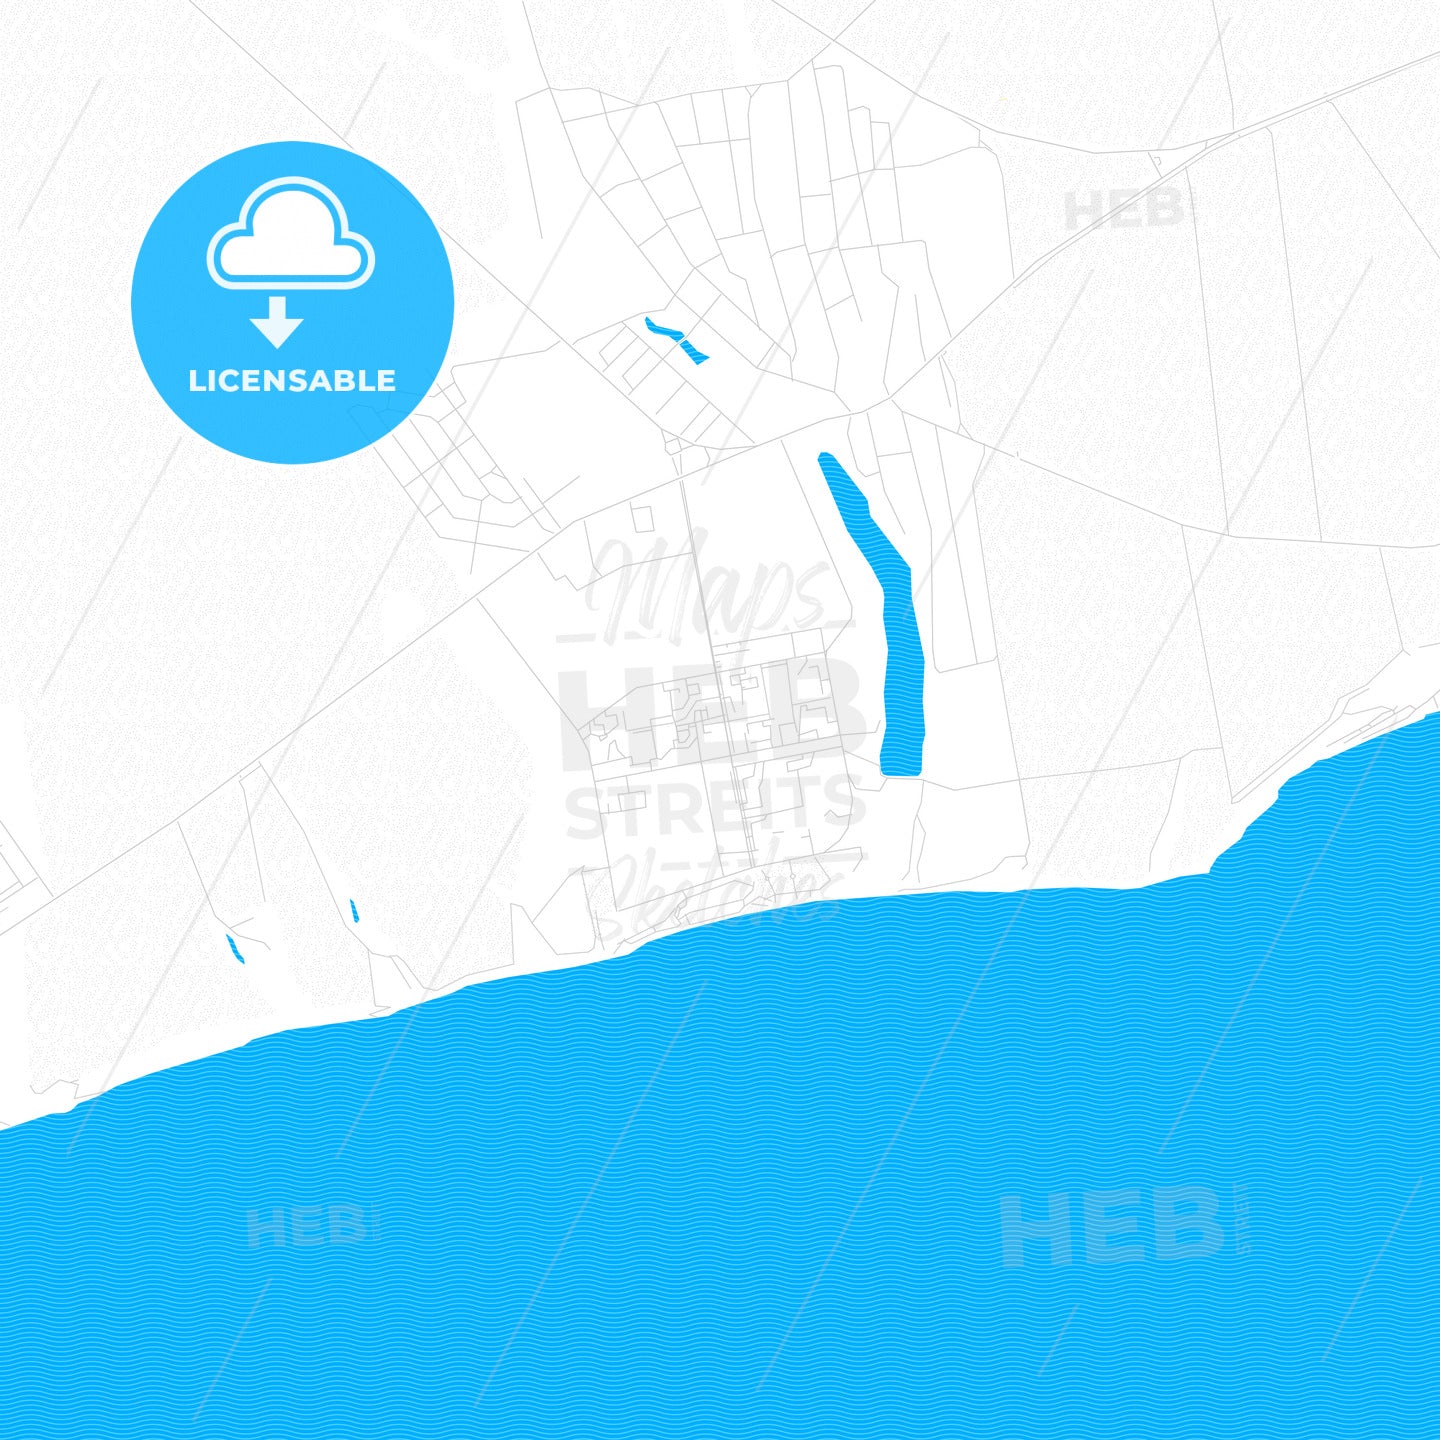 Yuzhne, Ukraine PDF vector map with water in focus